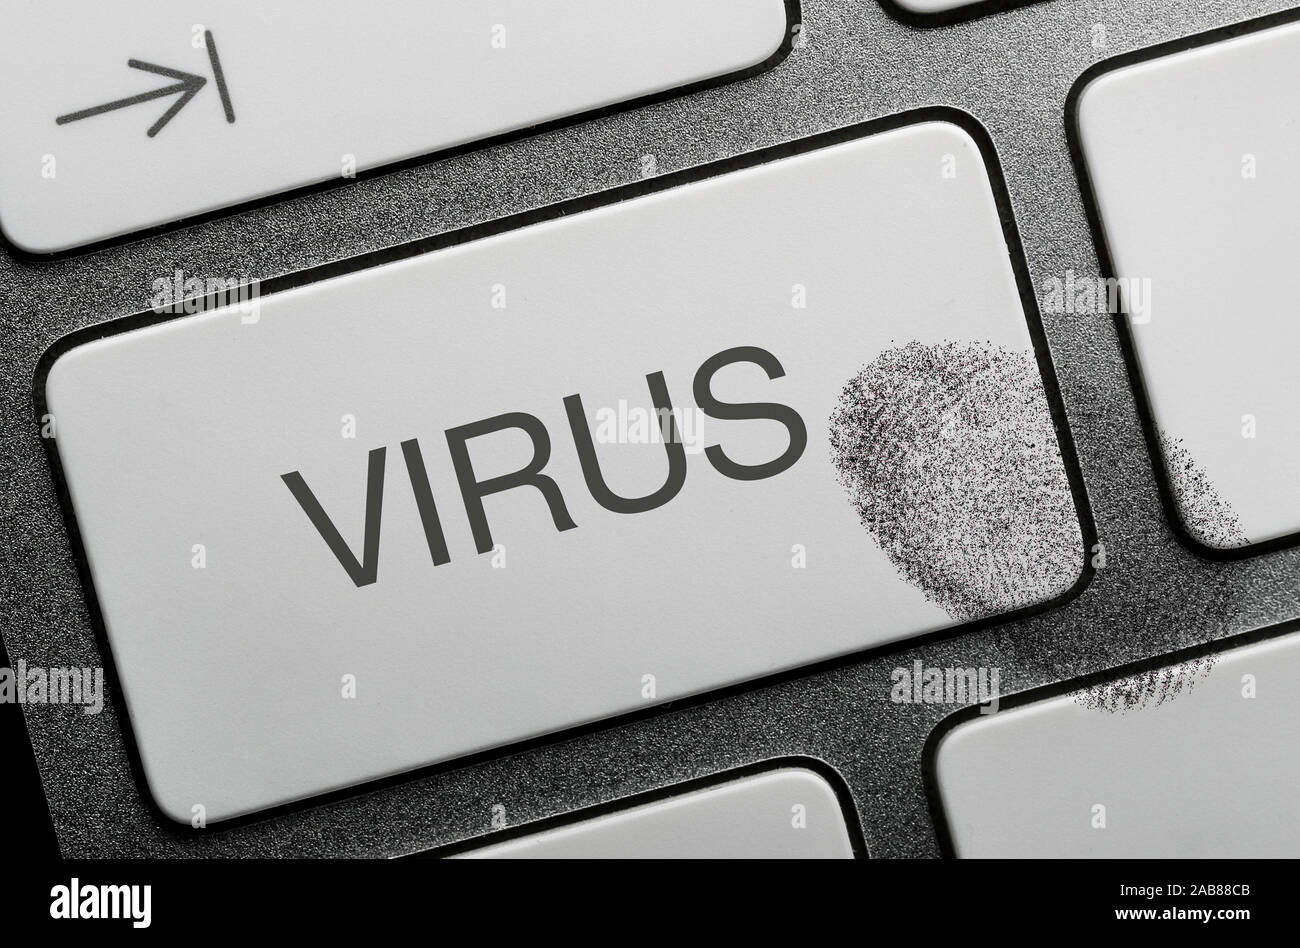 Concept internet crime images, Virus. Stock Photo